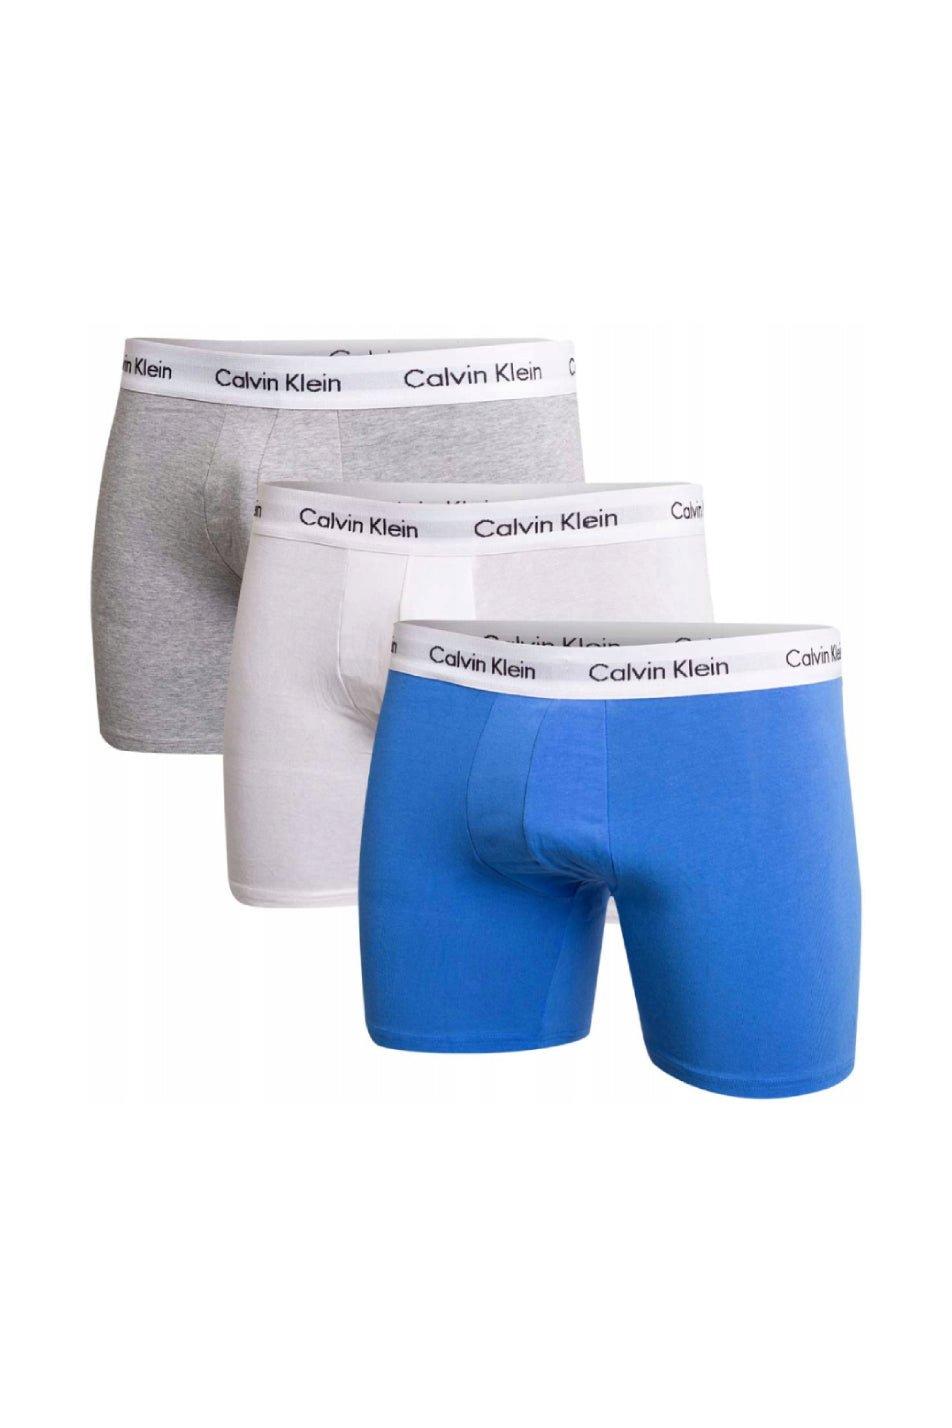 3 Pcs Big Size Men Undies Homme Underwear Boy Underpants Print Sexy Lingerie  Boxers Briefs Shorts Bottom Knickers Panties L-6XL - AliExpress